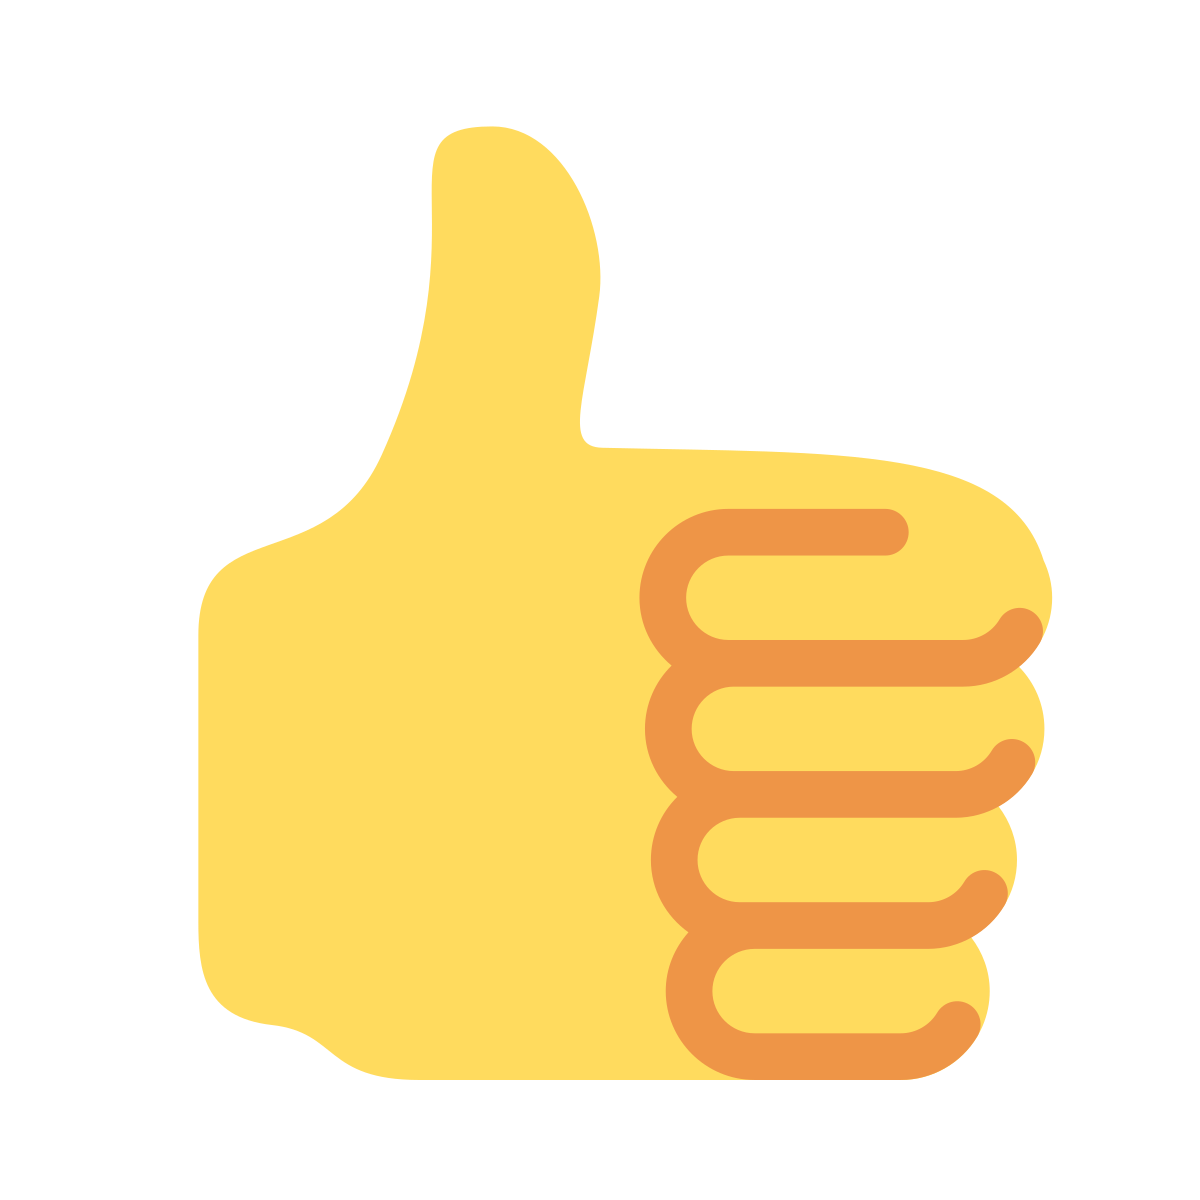 thumb up emoji meme